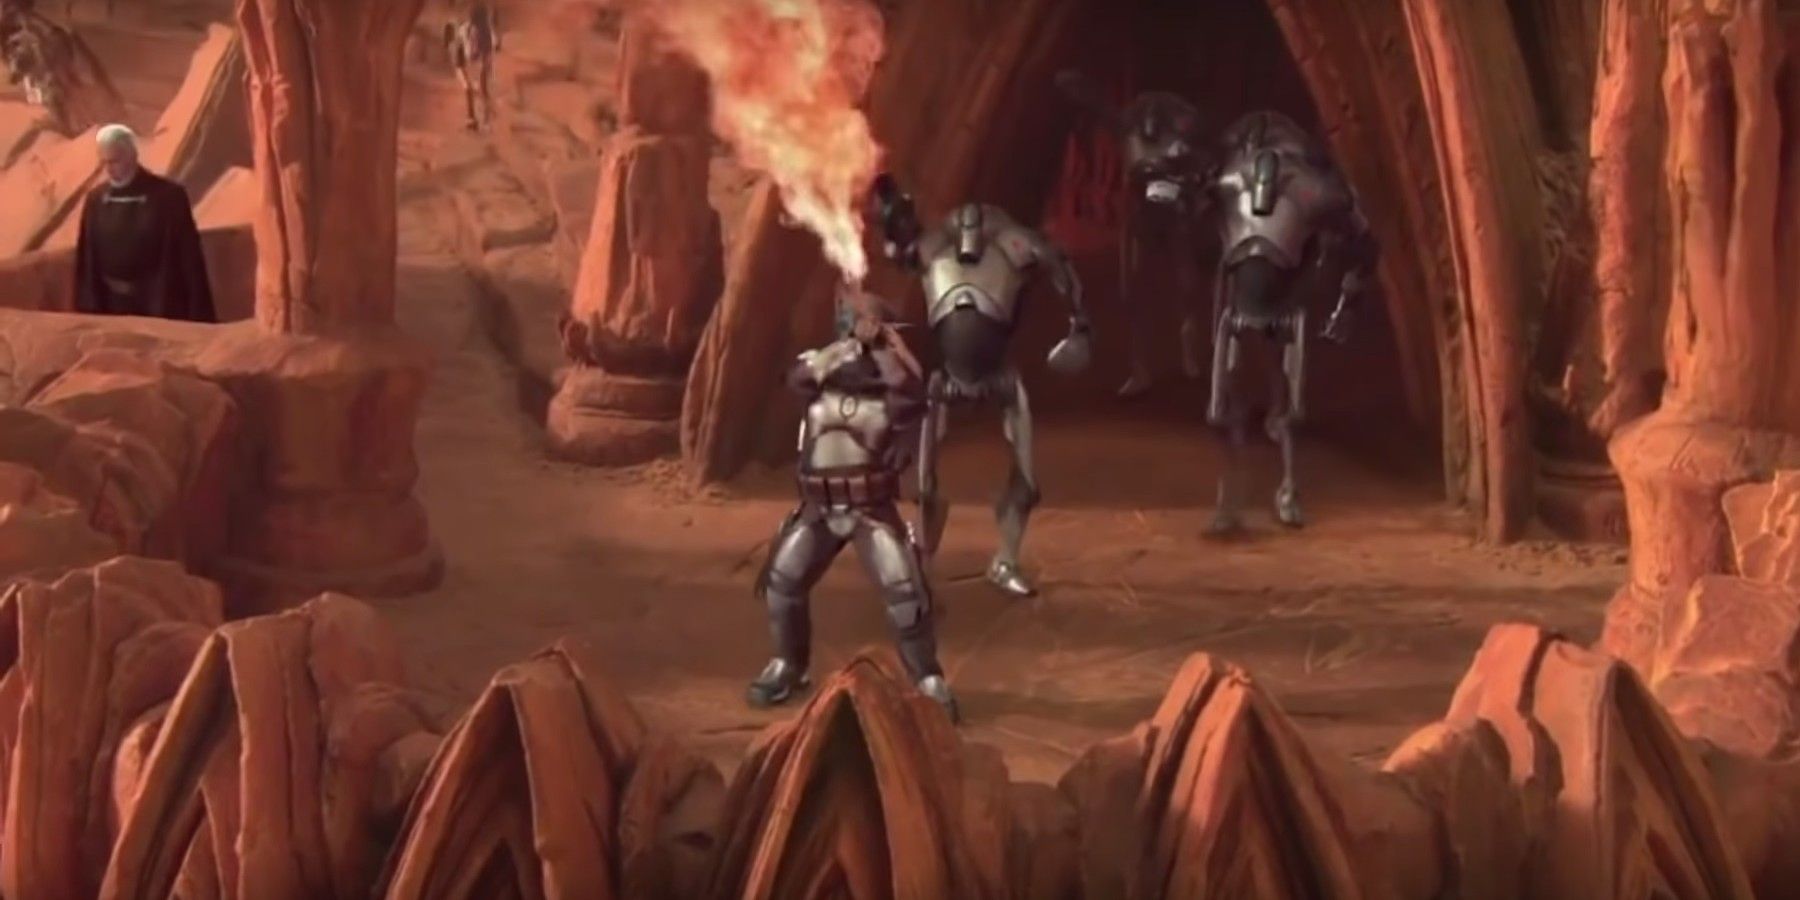 Jango Fett flamethrower in Star Wars Attack Of The Clones